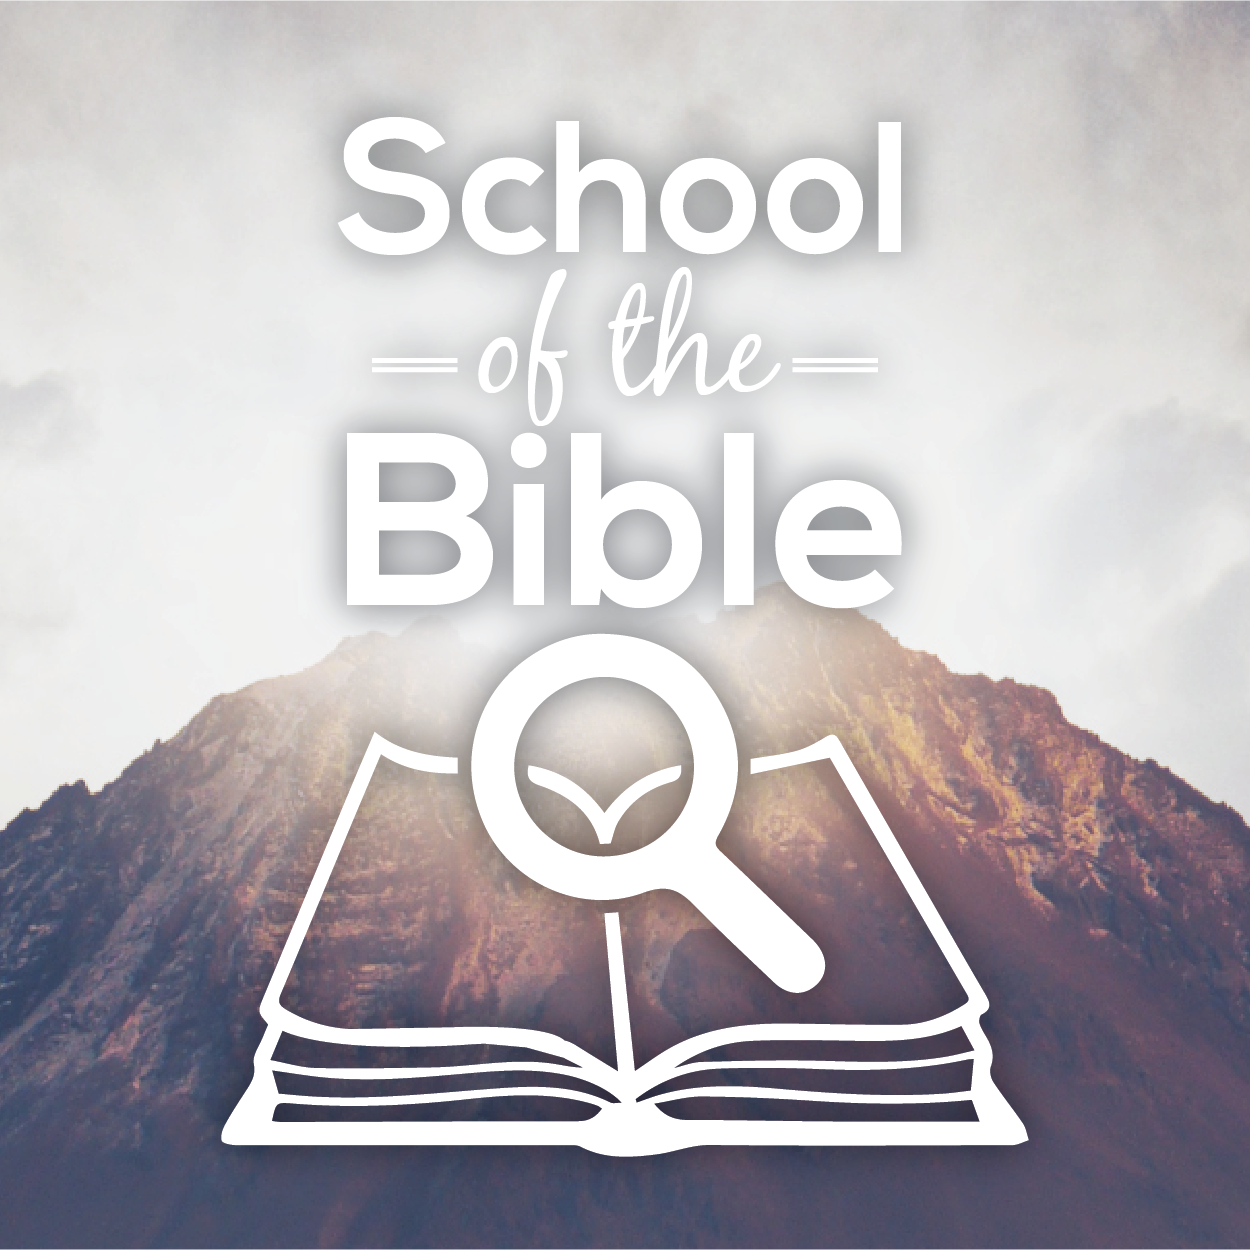 August 12, 2015 - School of the Bible